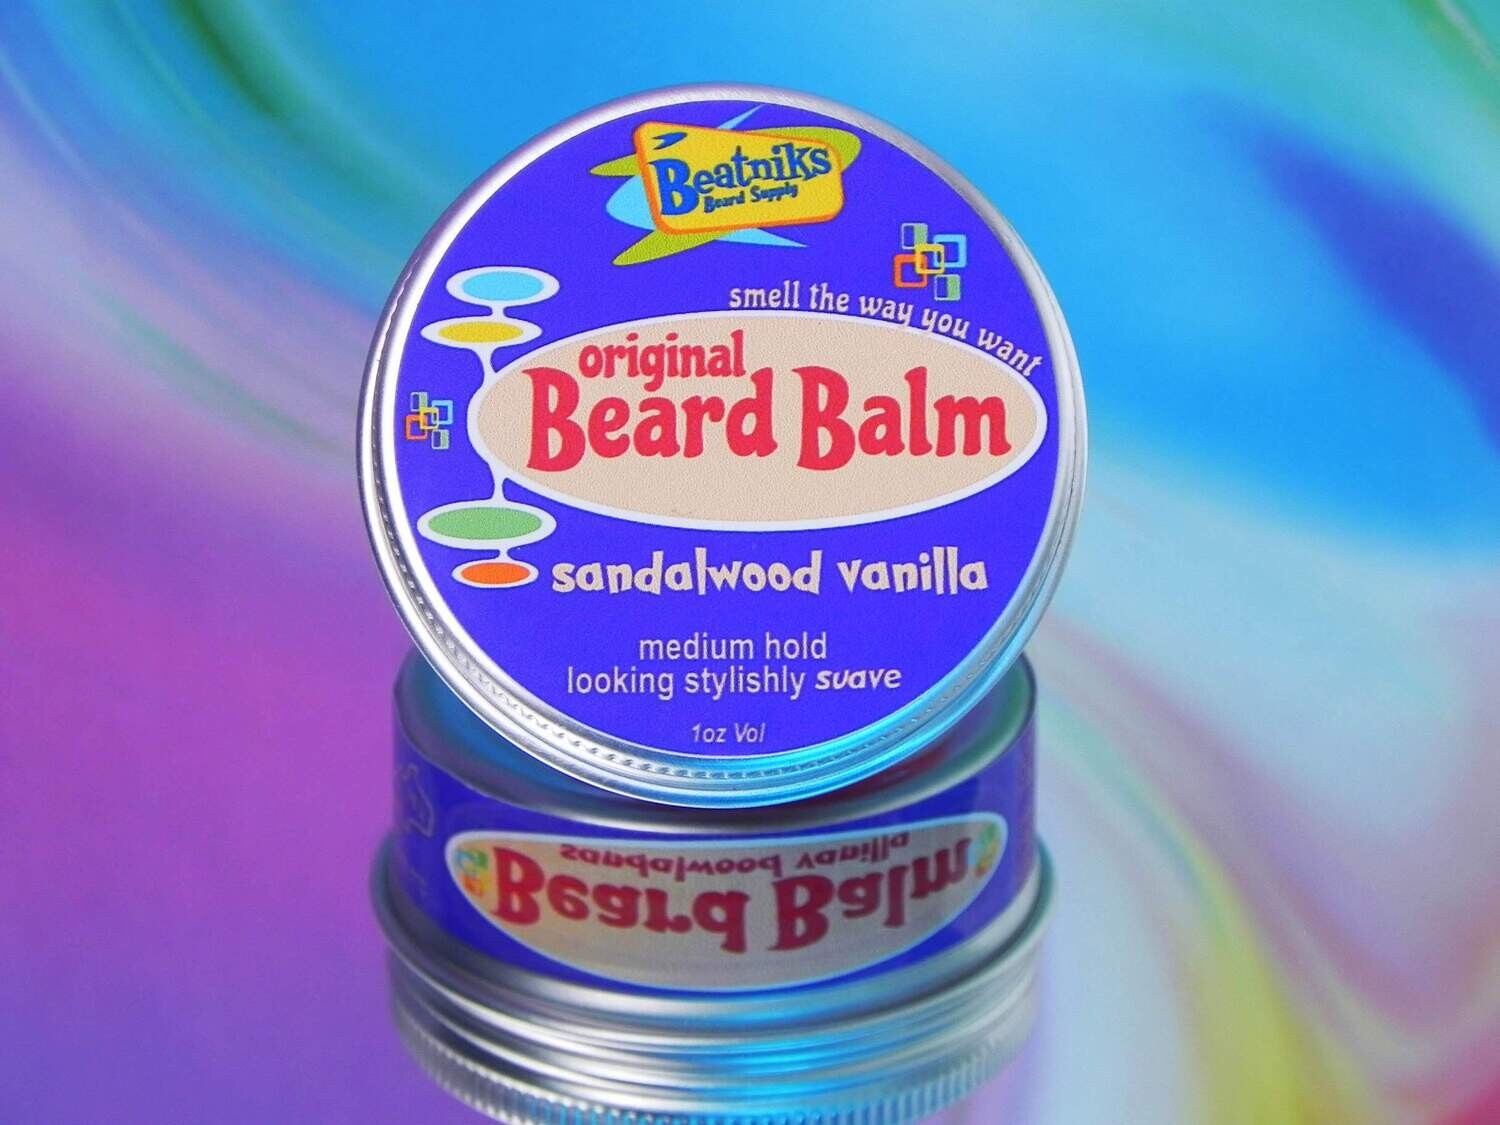 SANDALWOOD VANILLA | Beard Balm Original